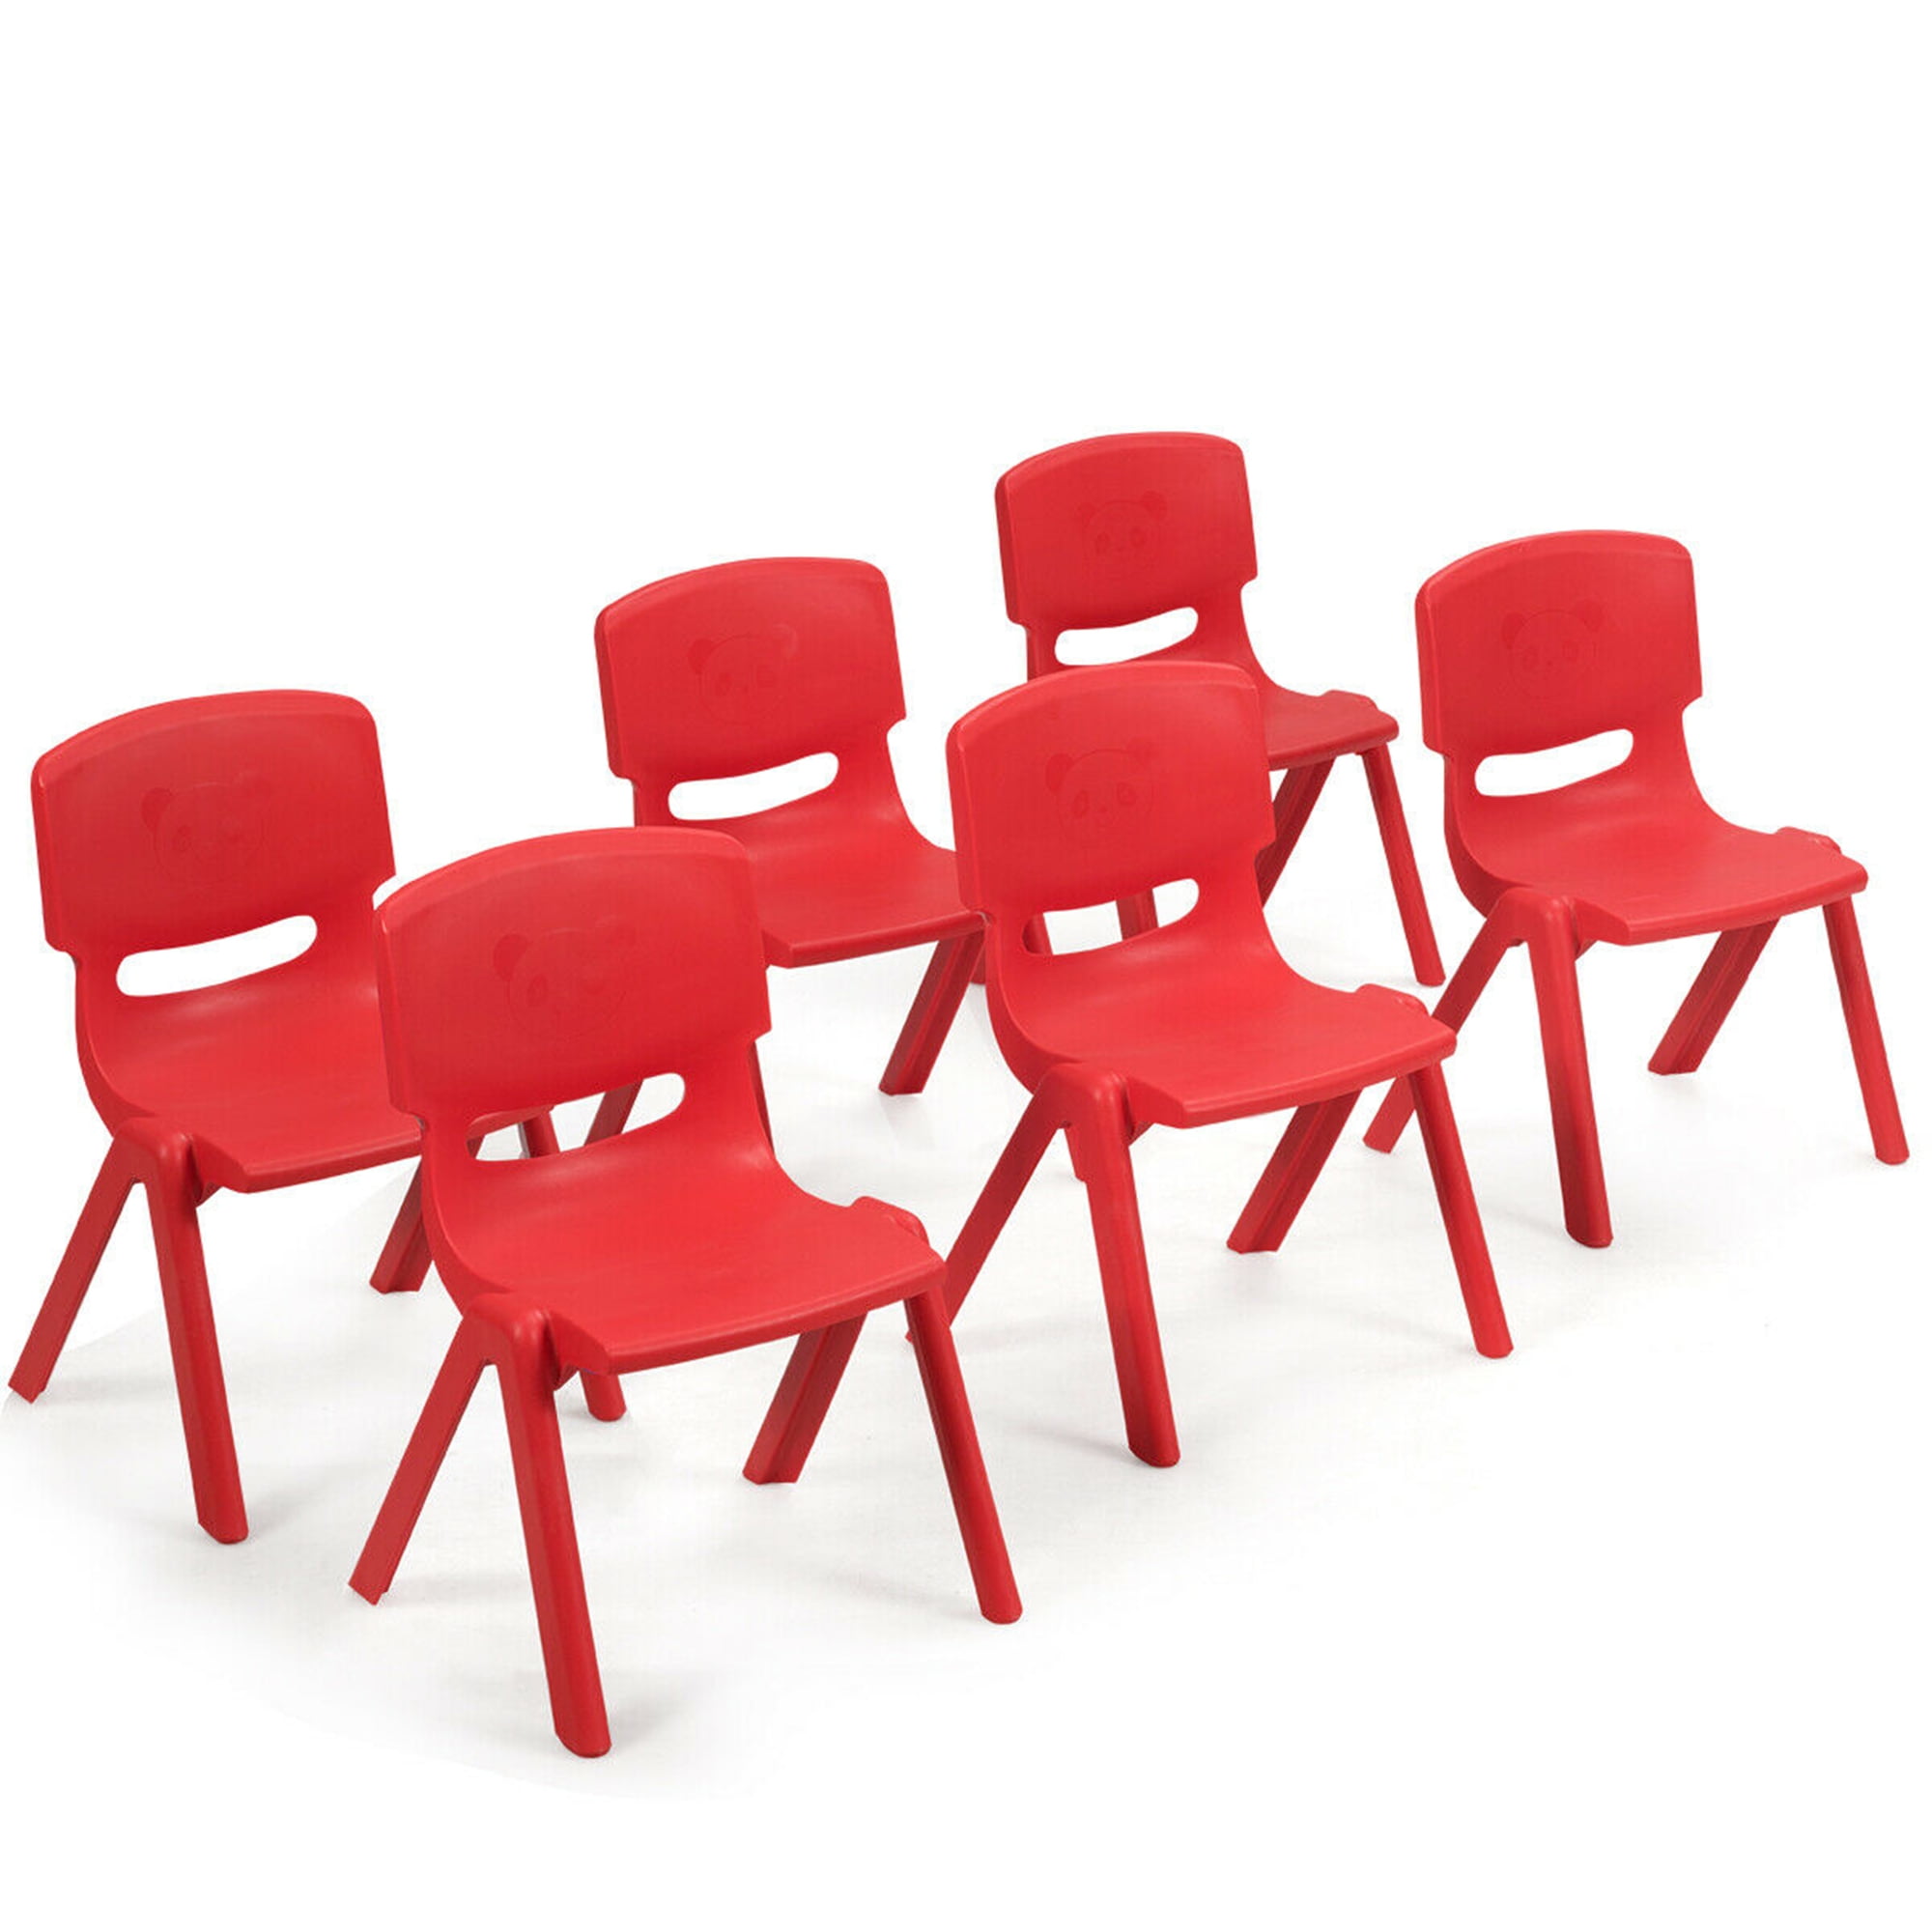 kindergarten chairs